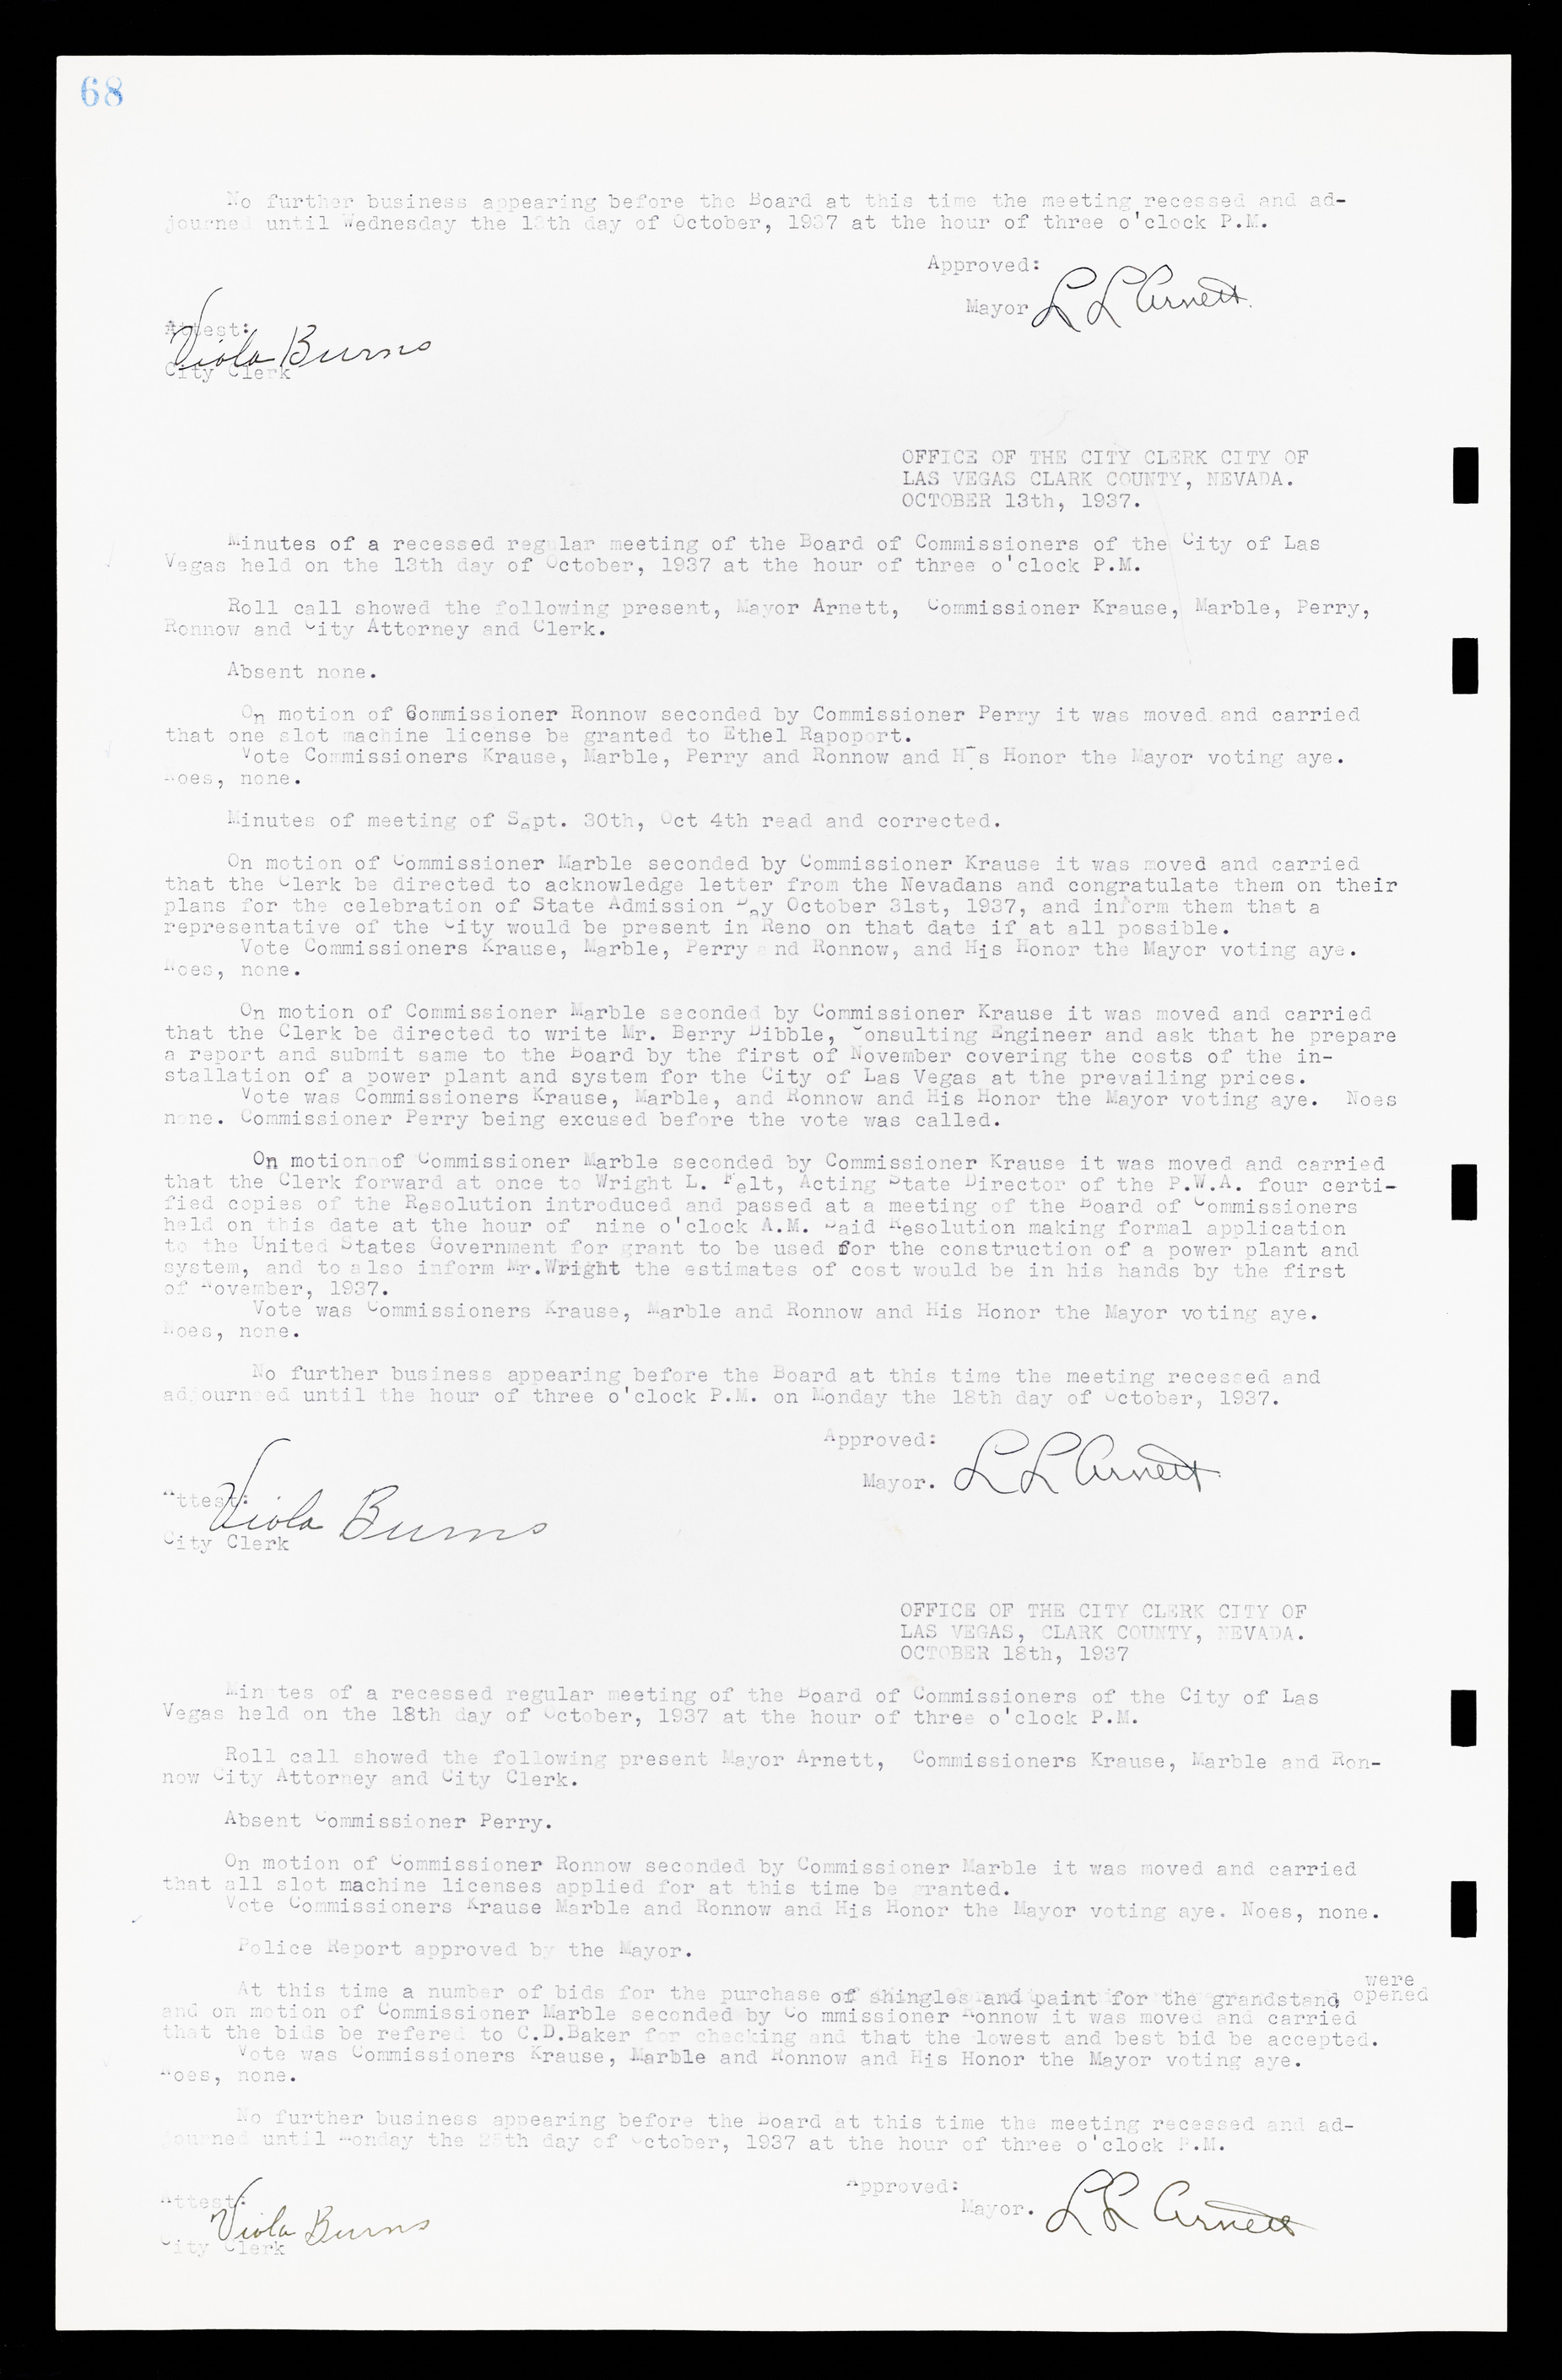 Las Vegas City Commission Minutes, February 17, 1937 to August 4, 1942, lvc000004-77